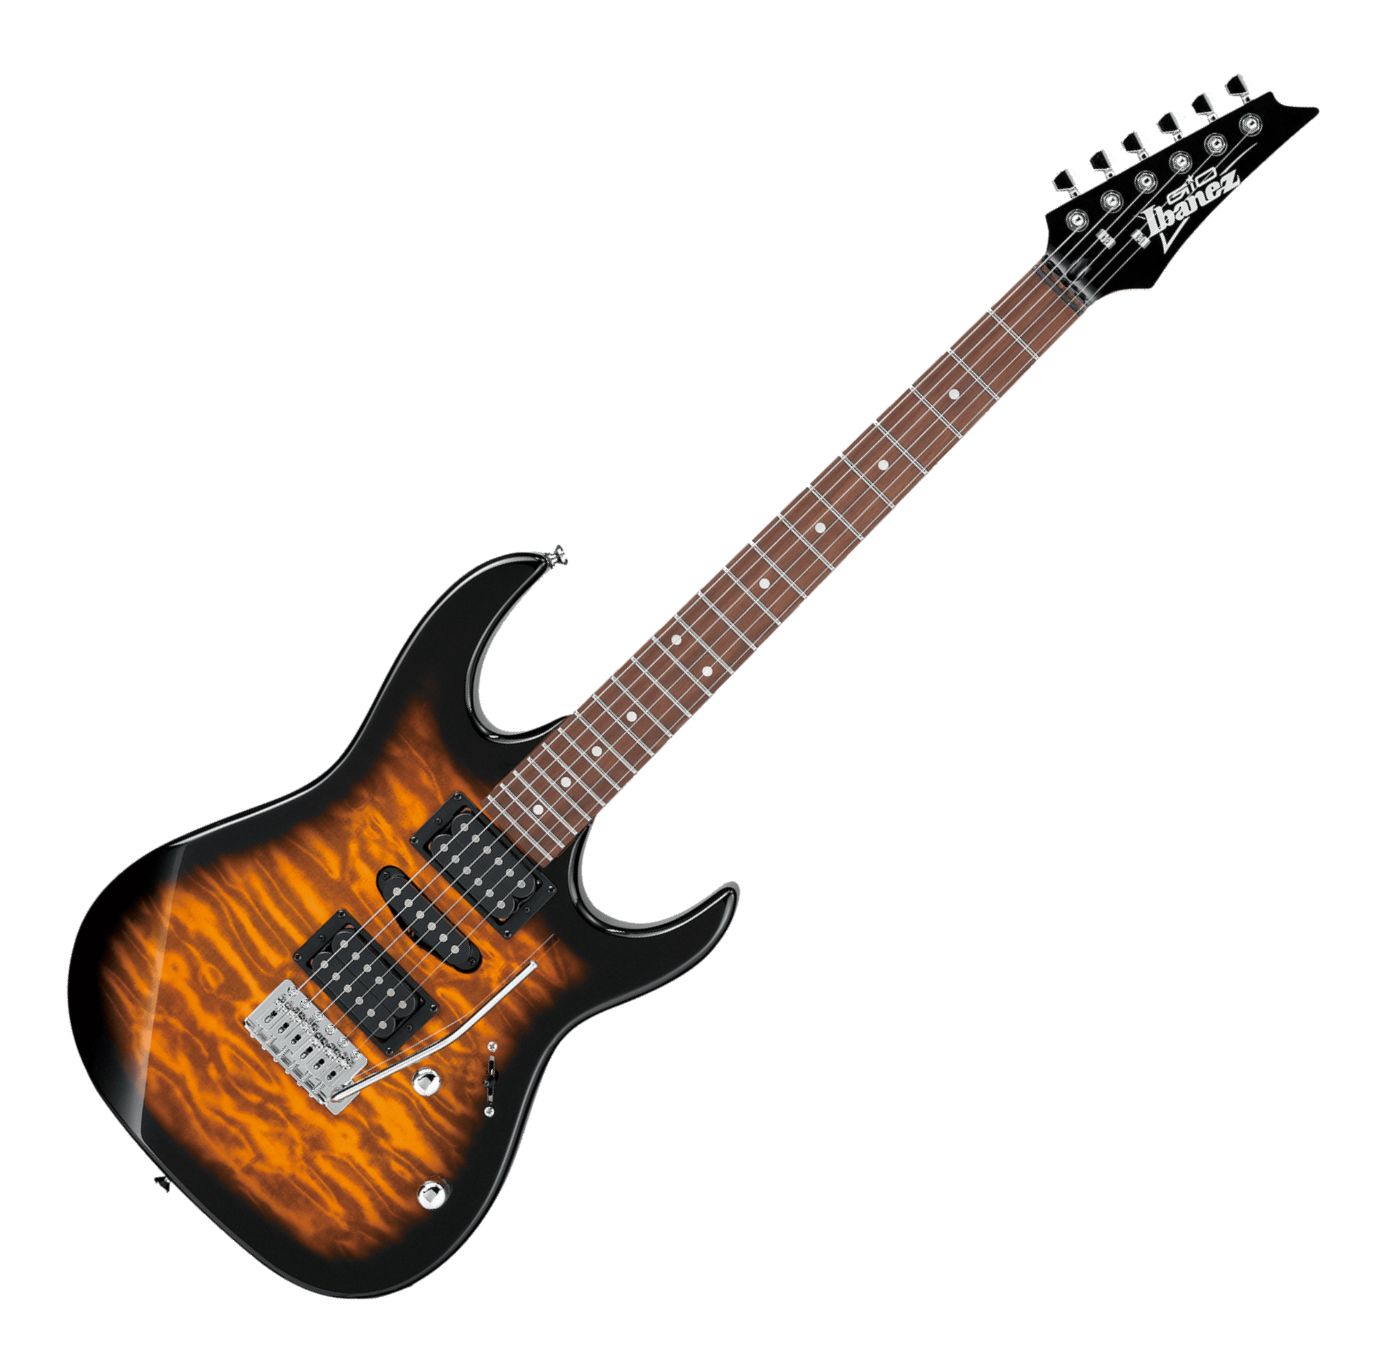 Ibanez Gio GRX70QA electric guitar in Sunburst